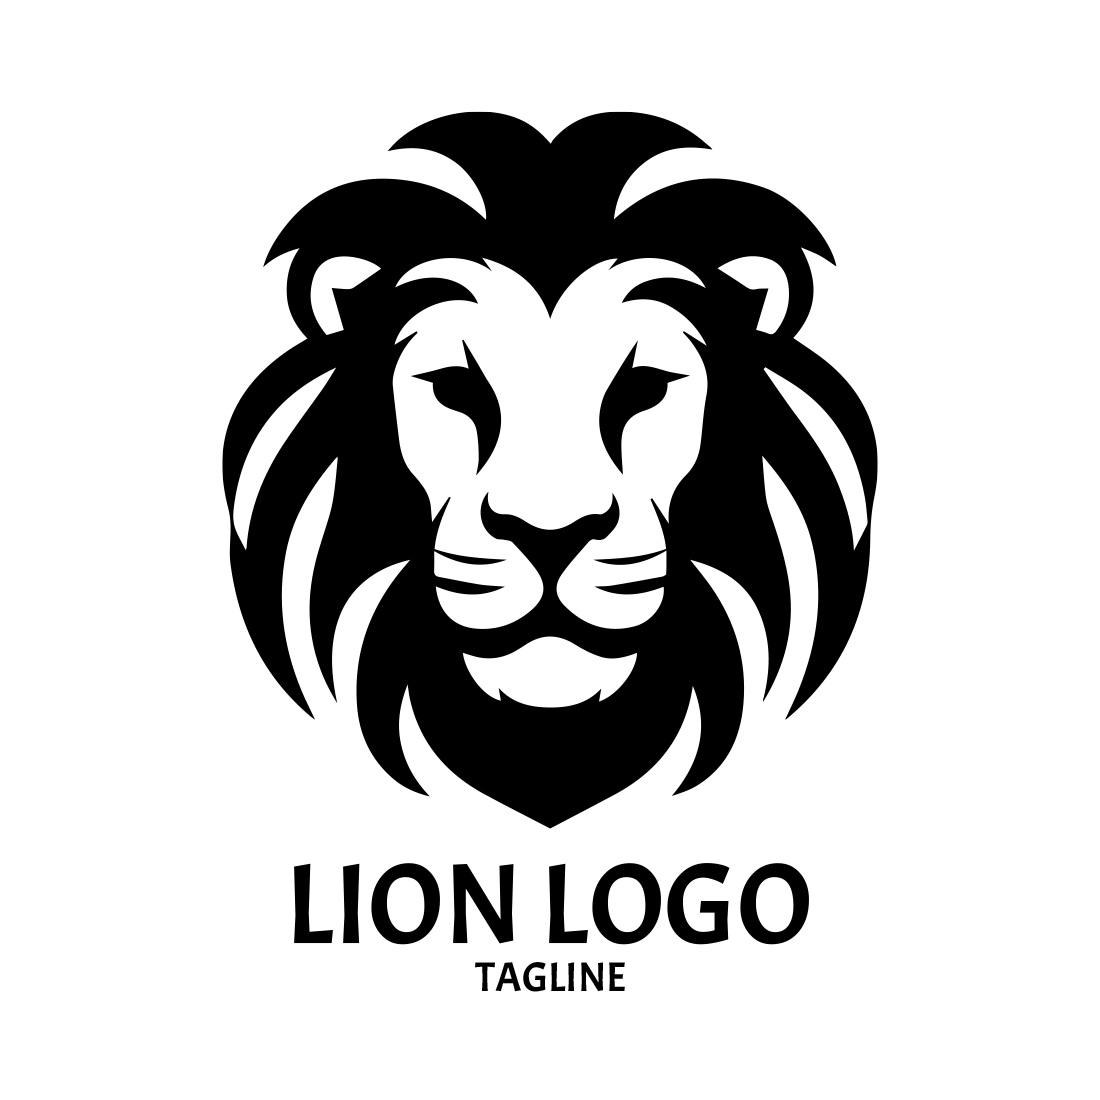 lion logo jpg file 971